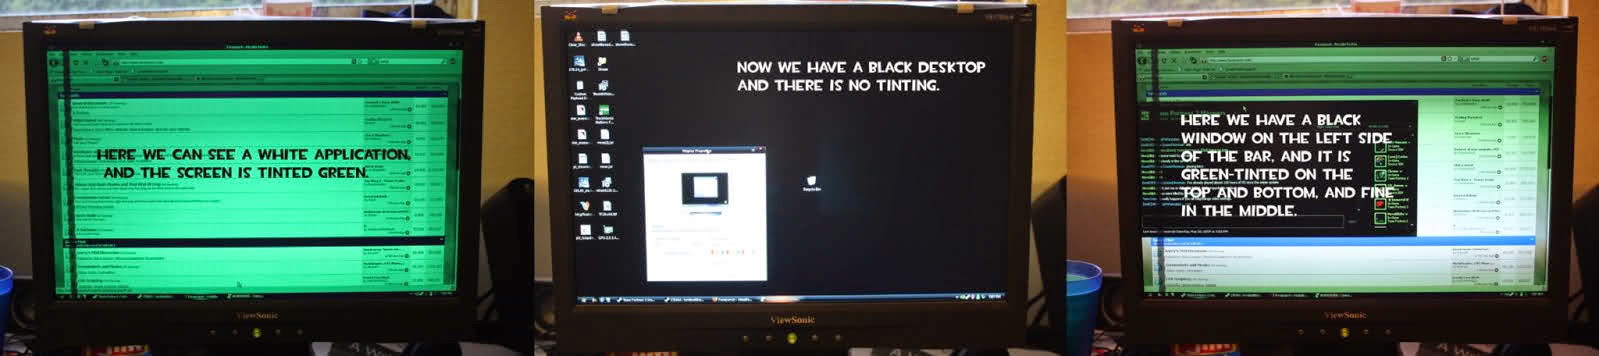 contoh tinted screen pada monitor